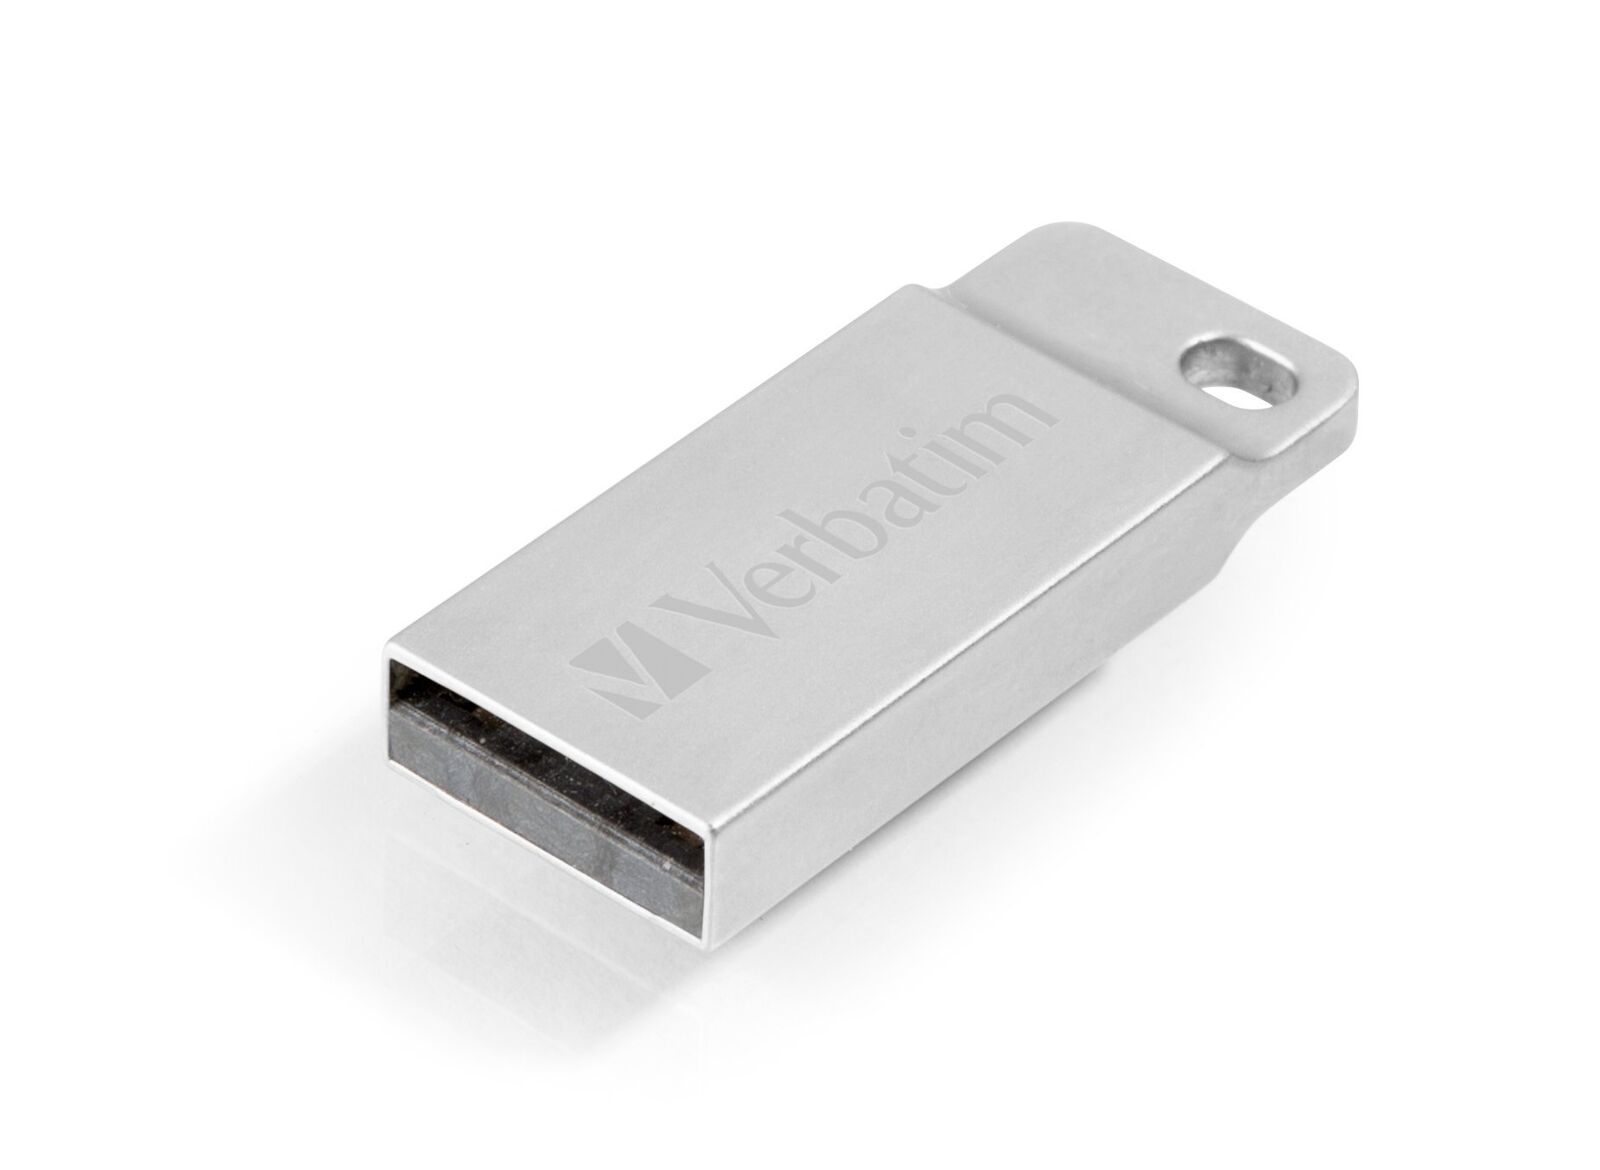 Verbatim Executive USB 2.0 Drive Made of Metal - Robust Stick with USB 2.0 Inter